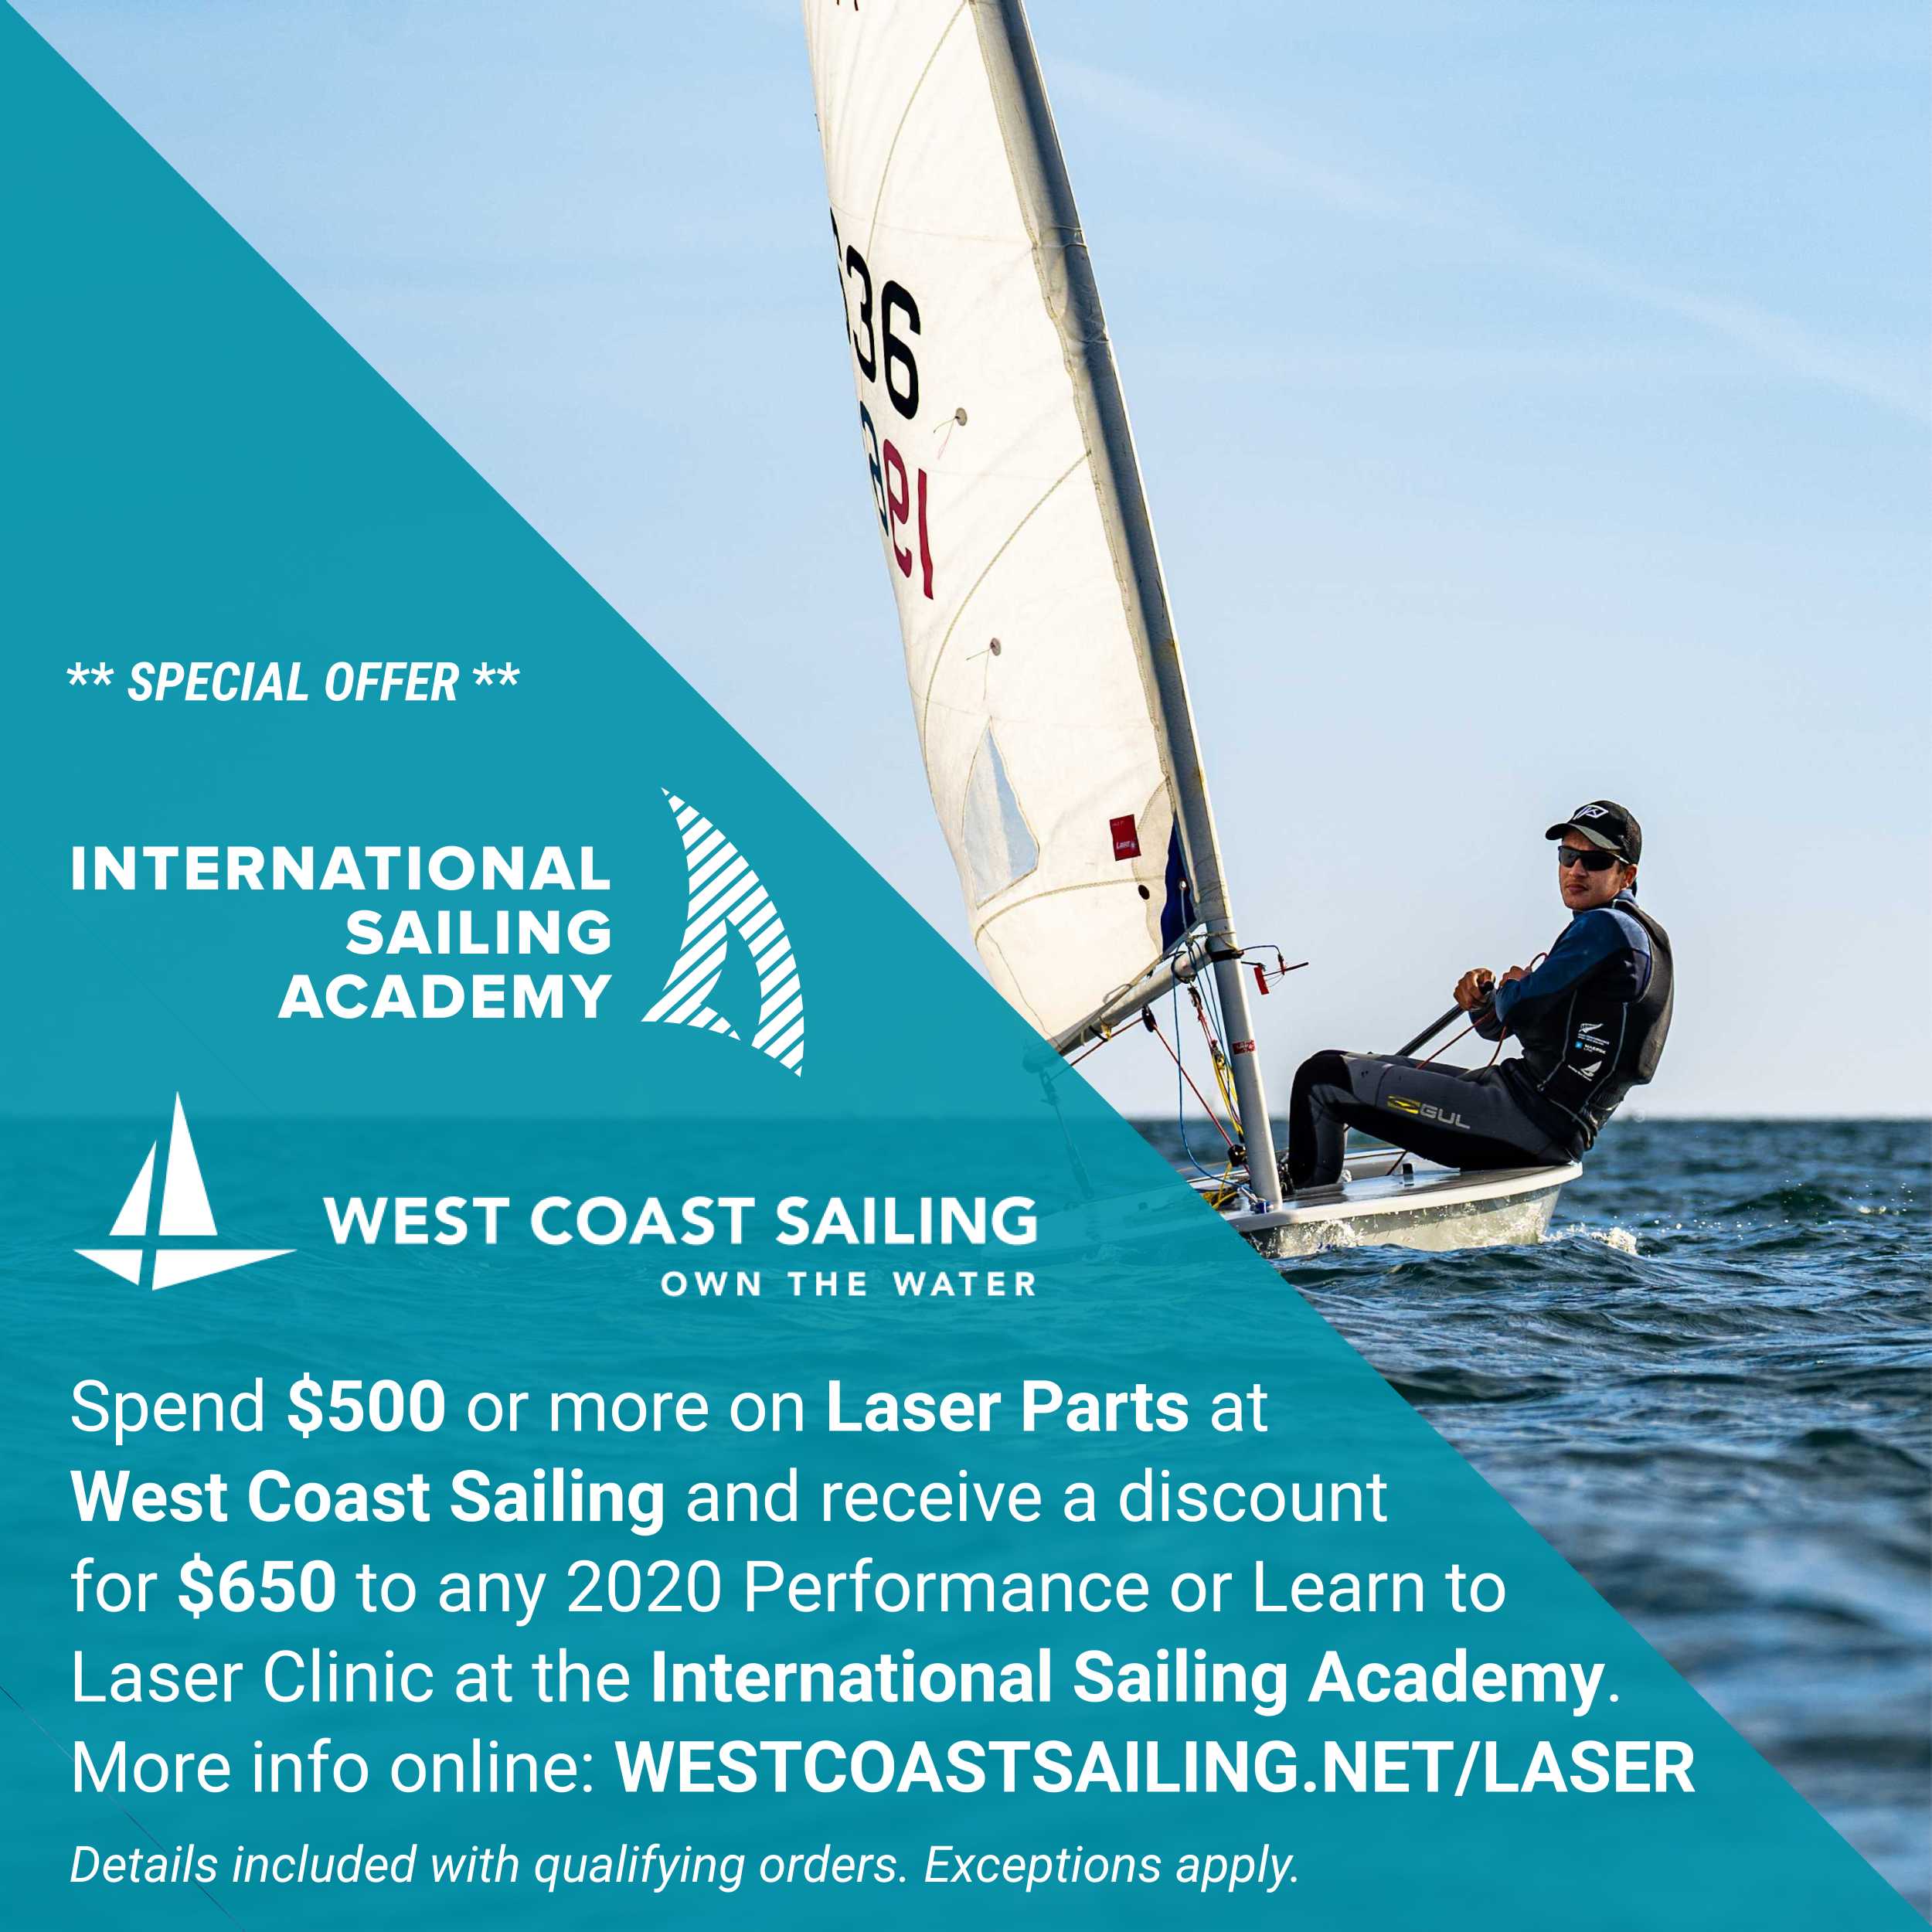 Save $650 on an International Sailing Academy Laser Clinic